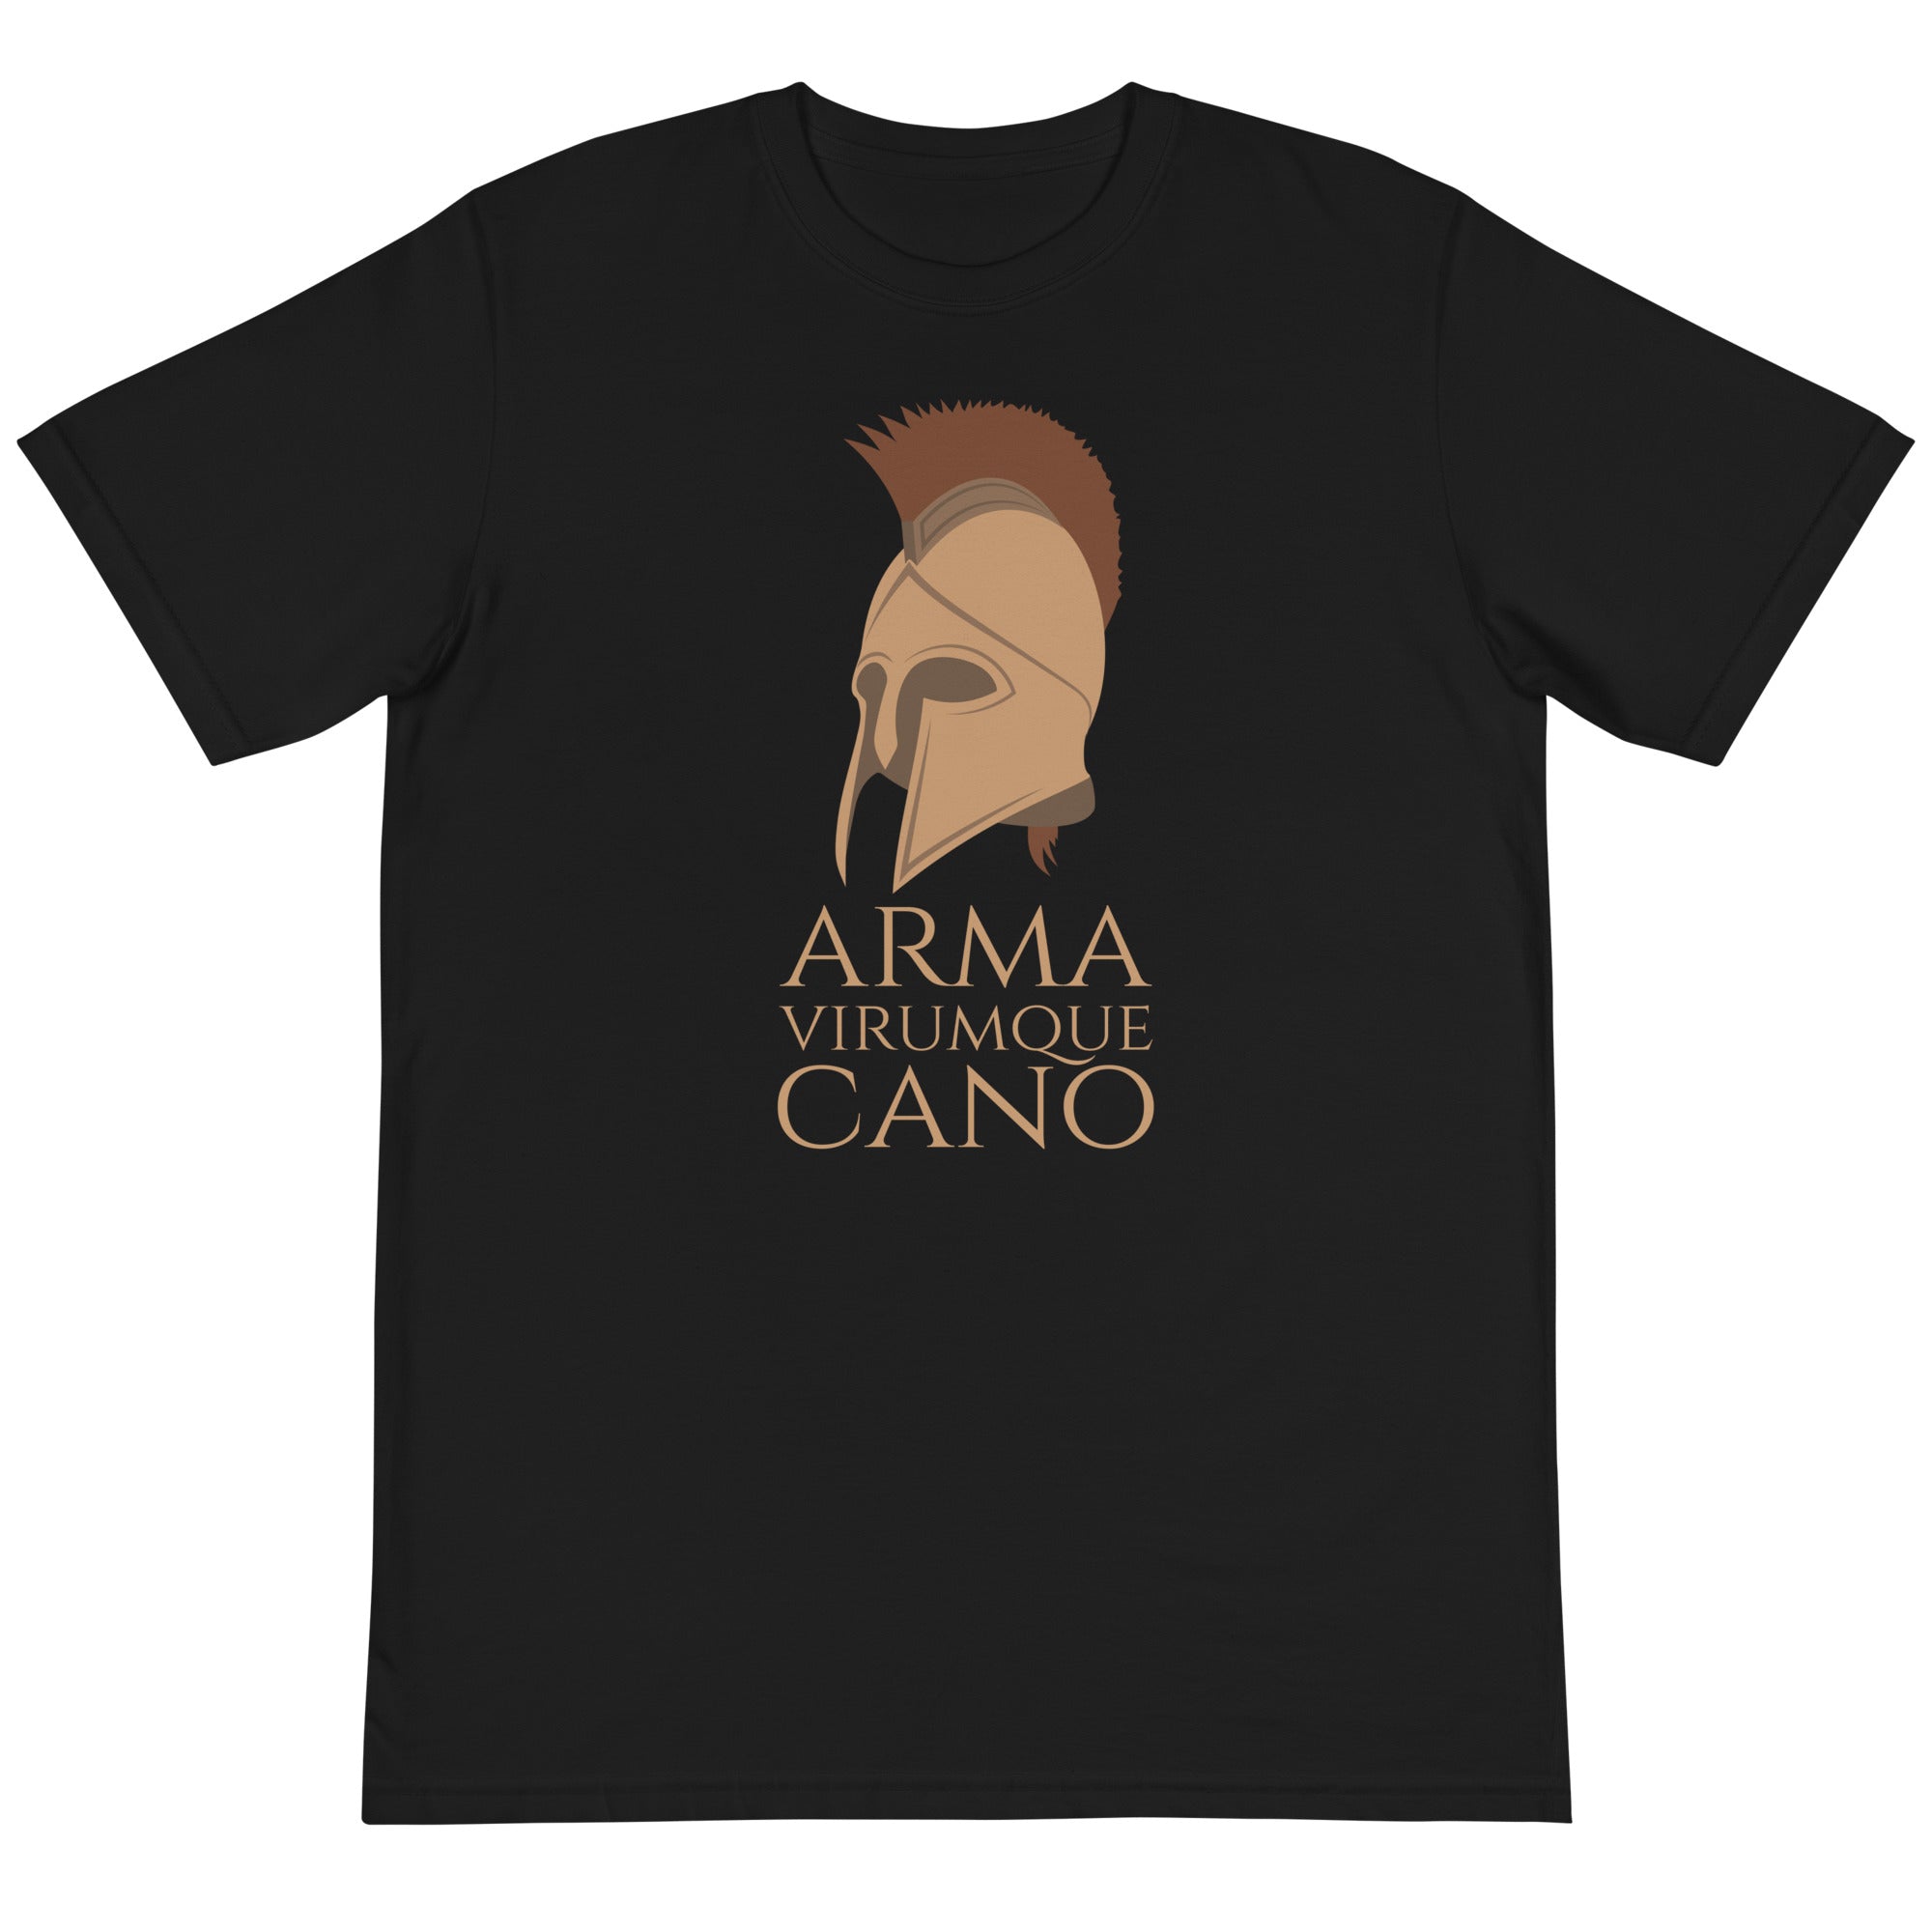 Arma Virumque Cano - I Sing Of Arms And The Man - The Aeneid Roman Mythology Unisex Organic T-Shirt